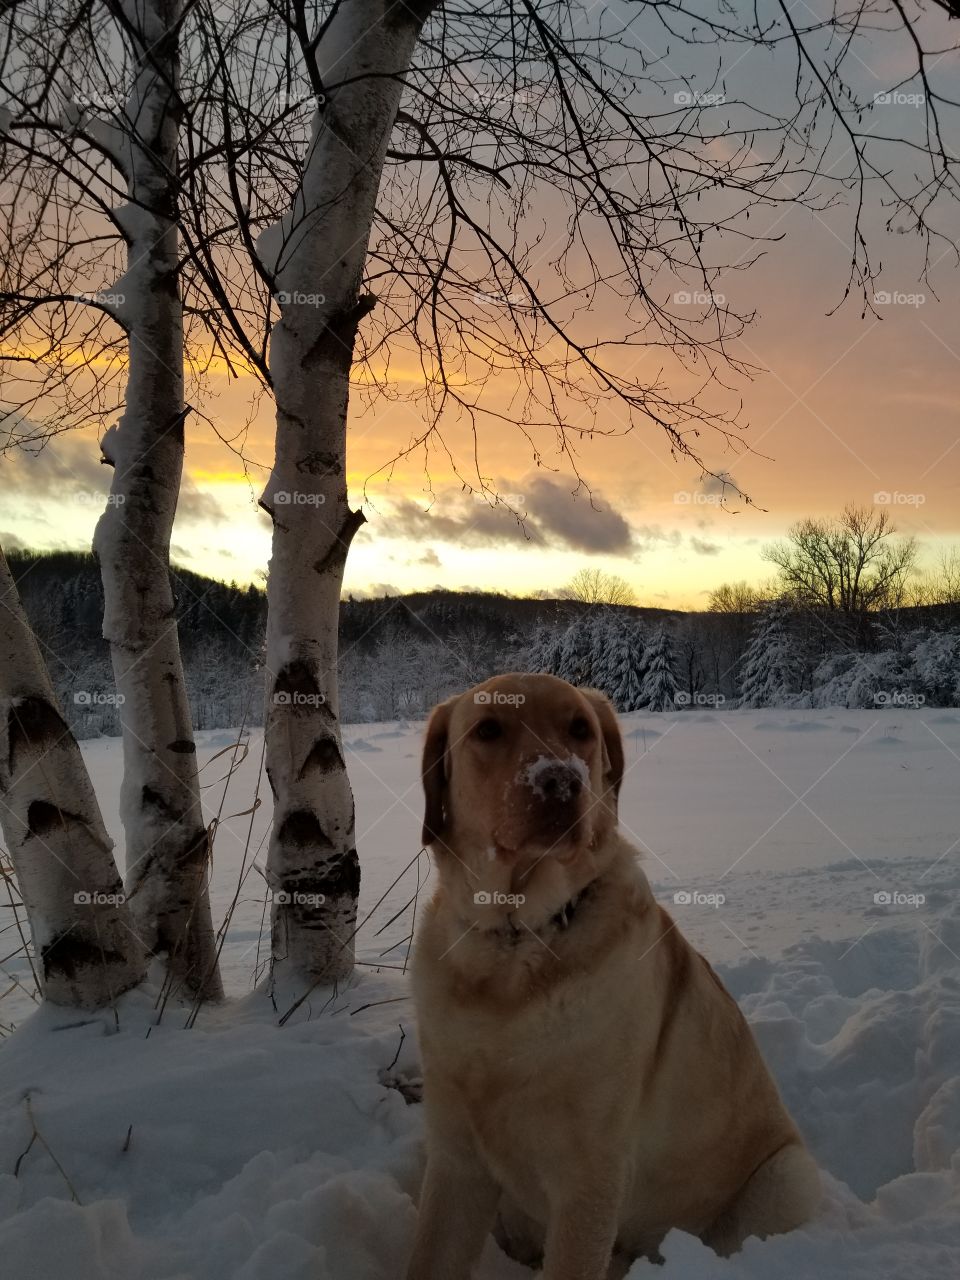 a dog enjoying a sunset under a young
 birch tree